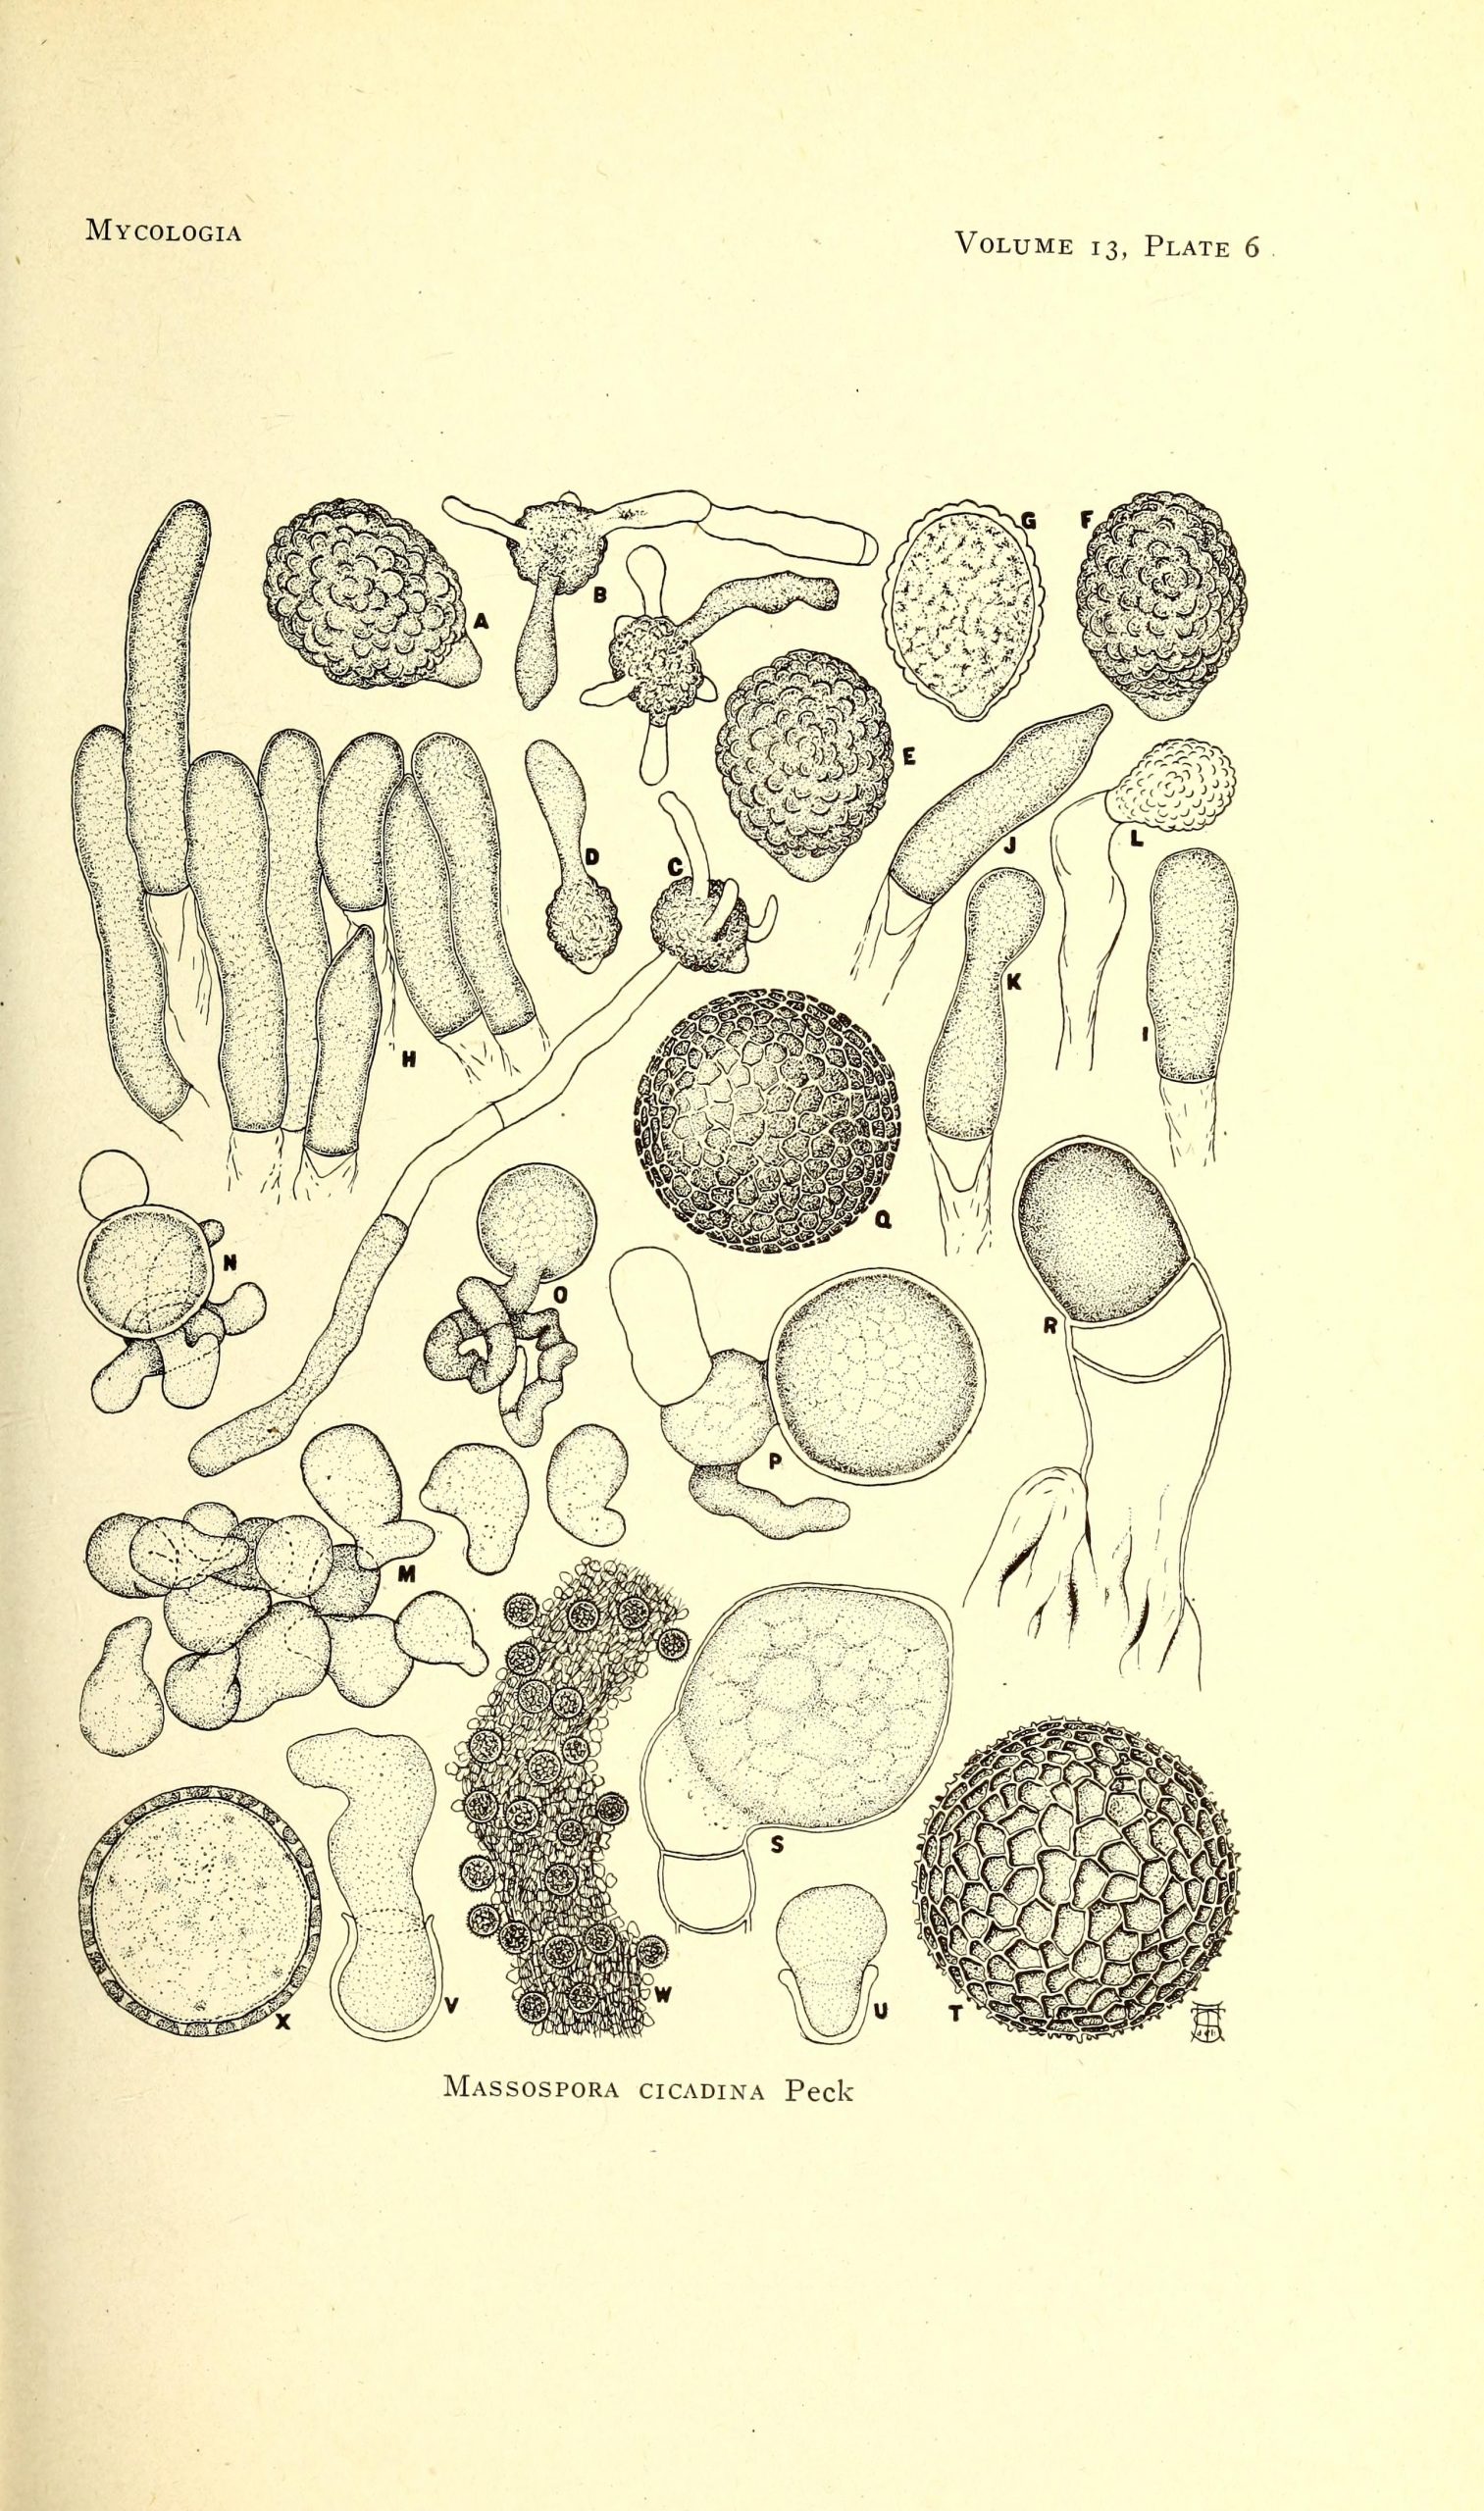 Black and white drawings of Massospora cicadina fungus.